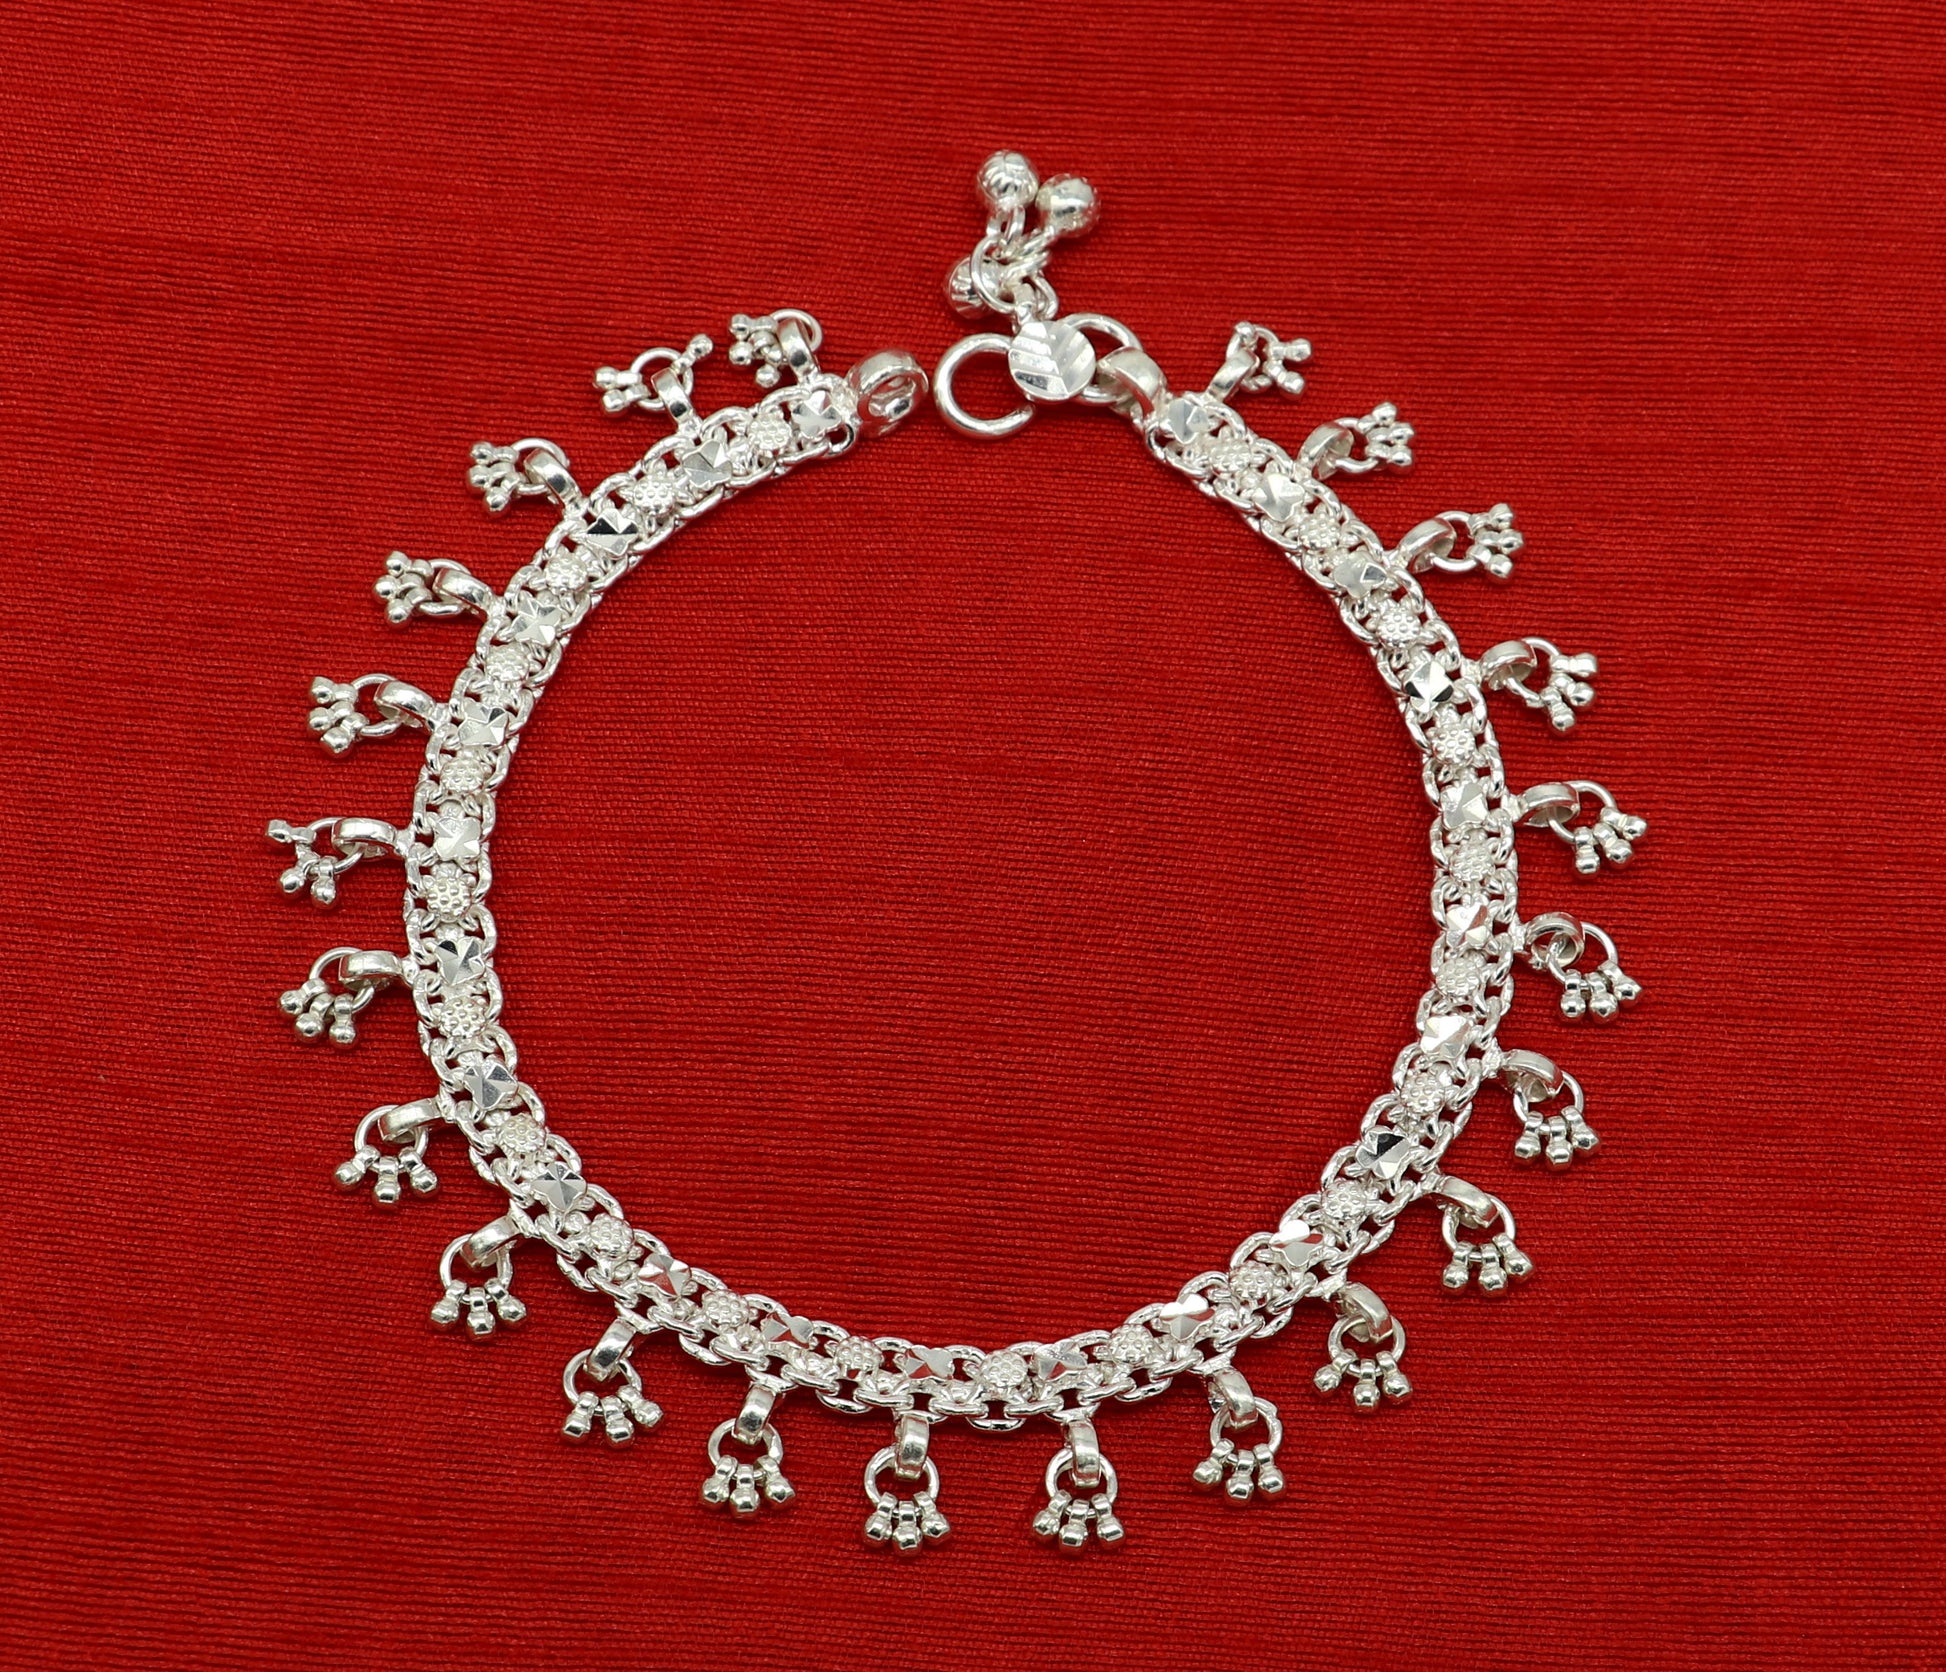 10.5" sterling silver solid handmade vintage stylish anklet bracelet foot bracelet tribal belly dance wedding tribal jewelry gifting ank383 - TRIBAL ORNAMENTS